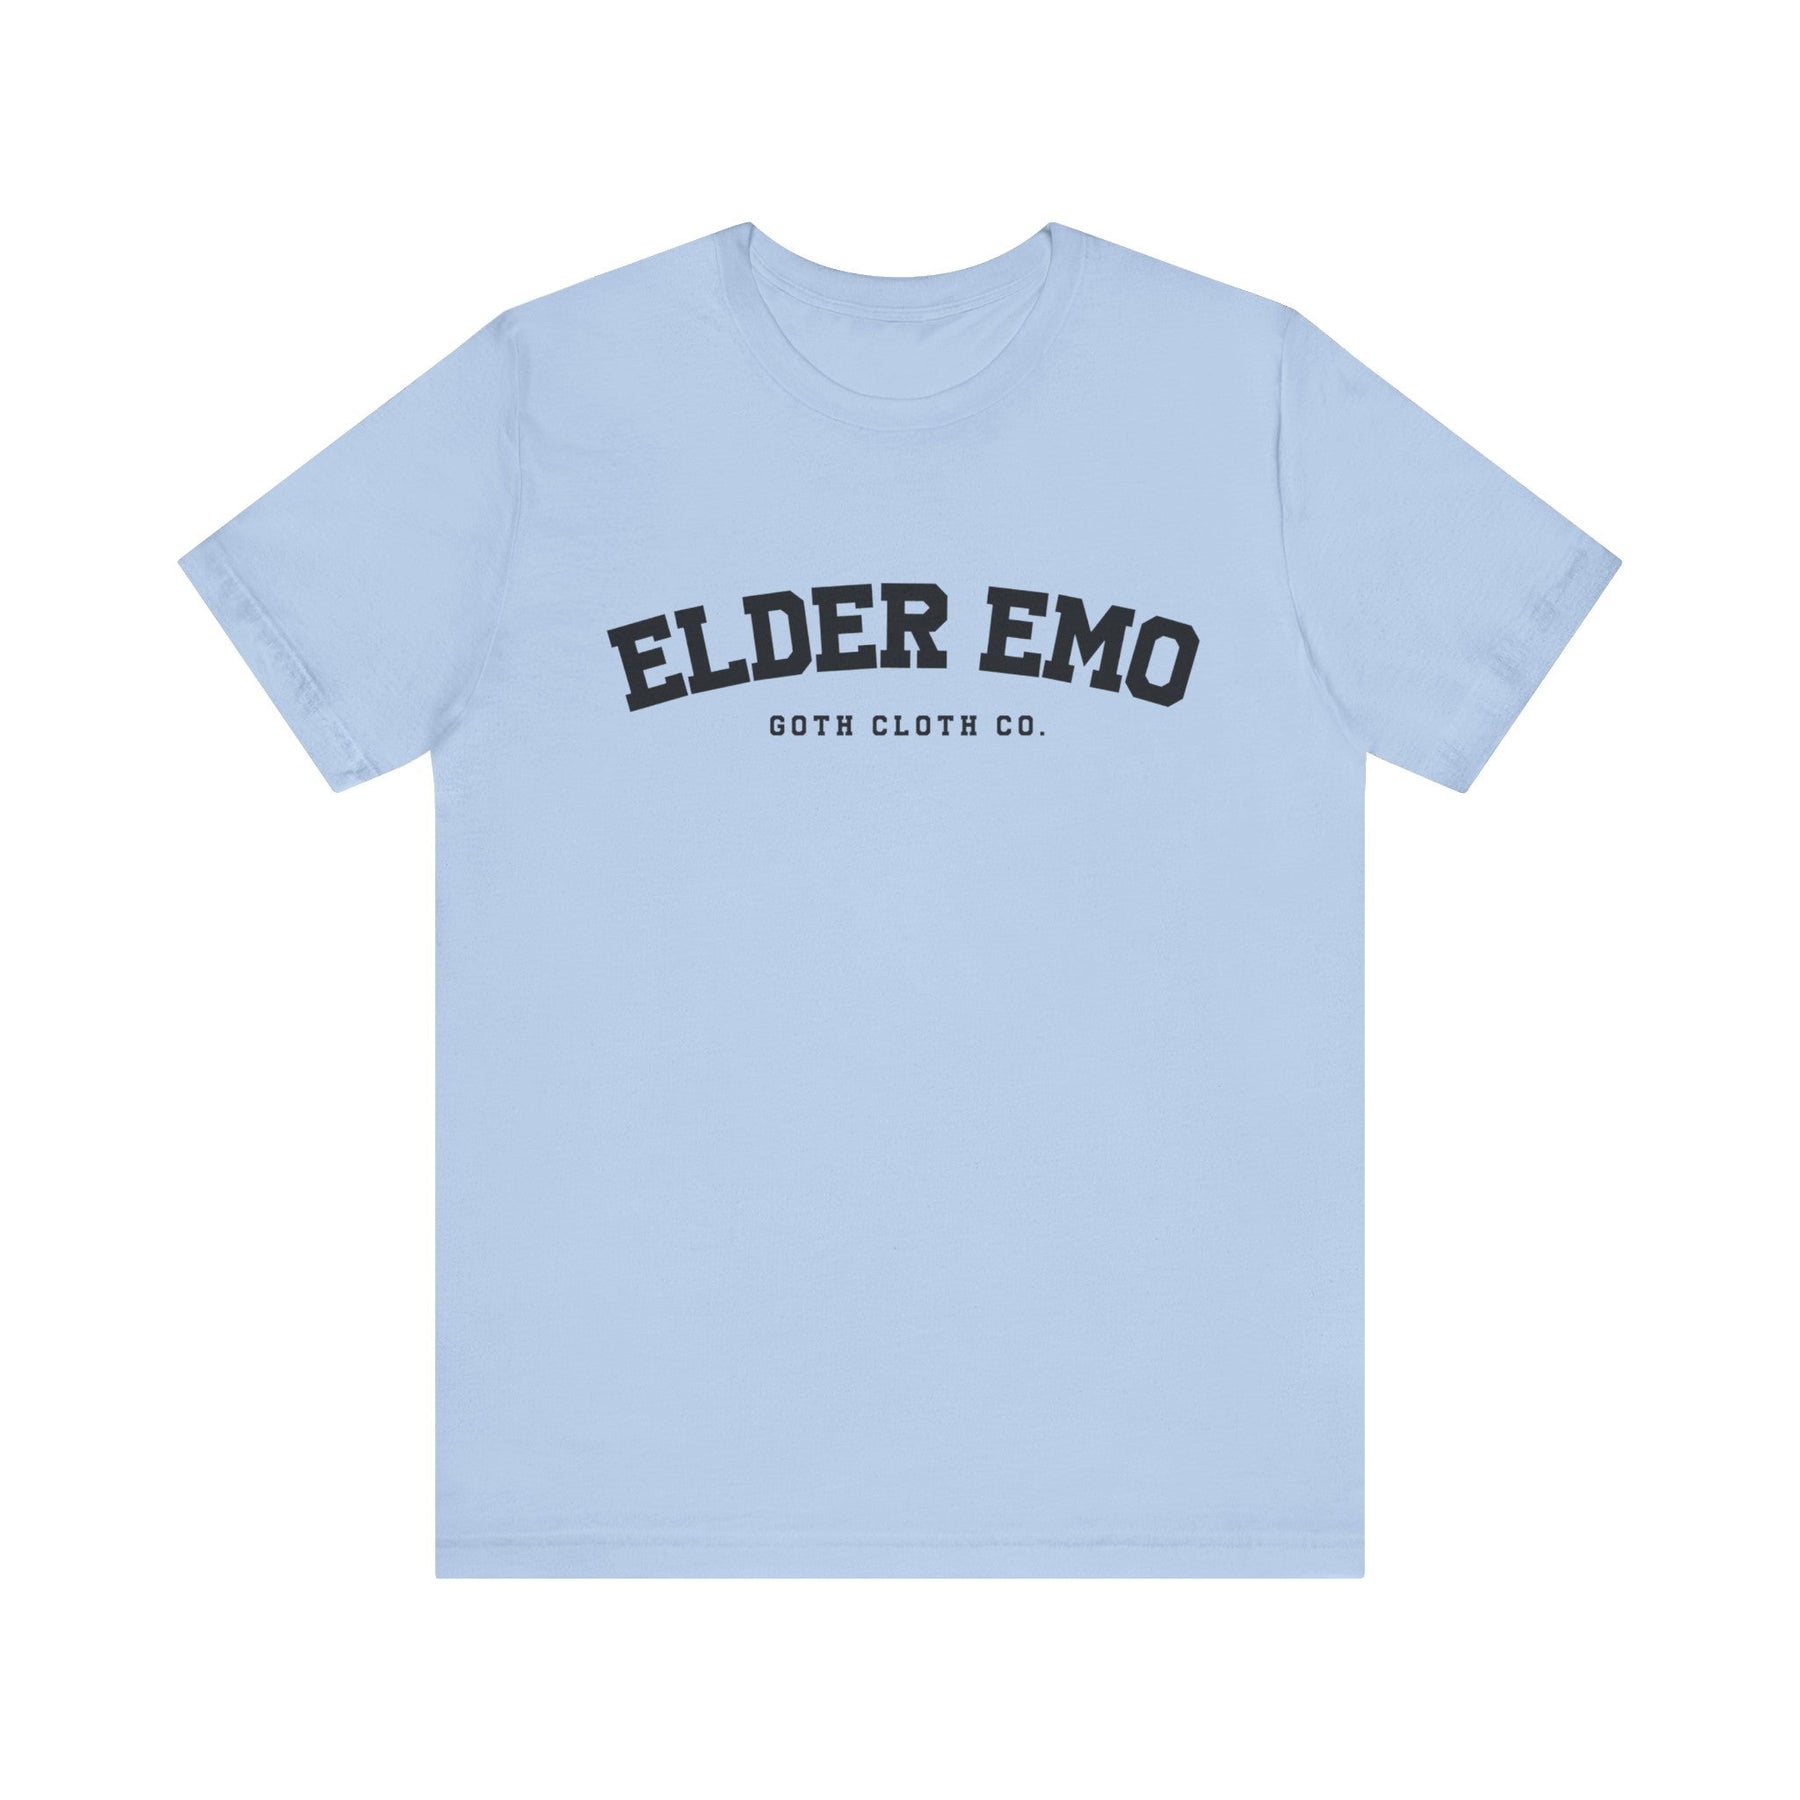 Elder Emo Short Sleeve Tee - Goth Cloth Co.T - Shirt30289671445288182388